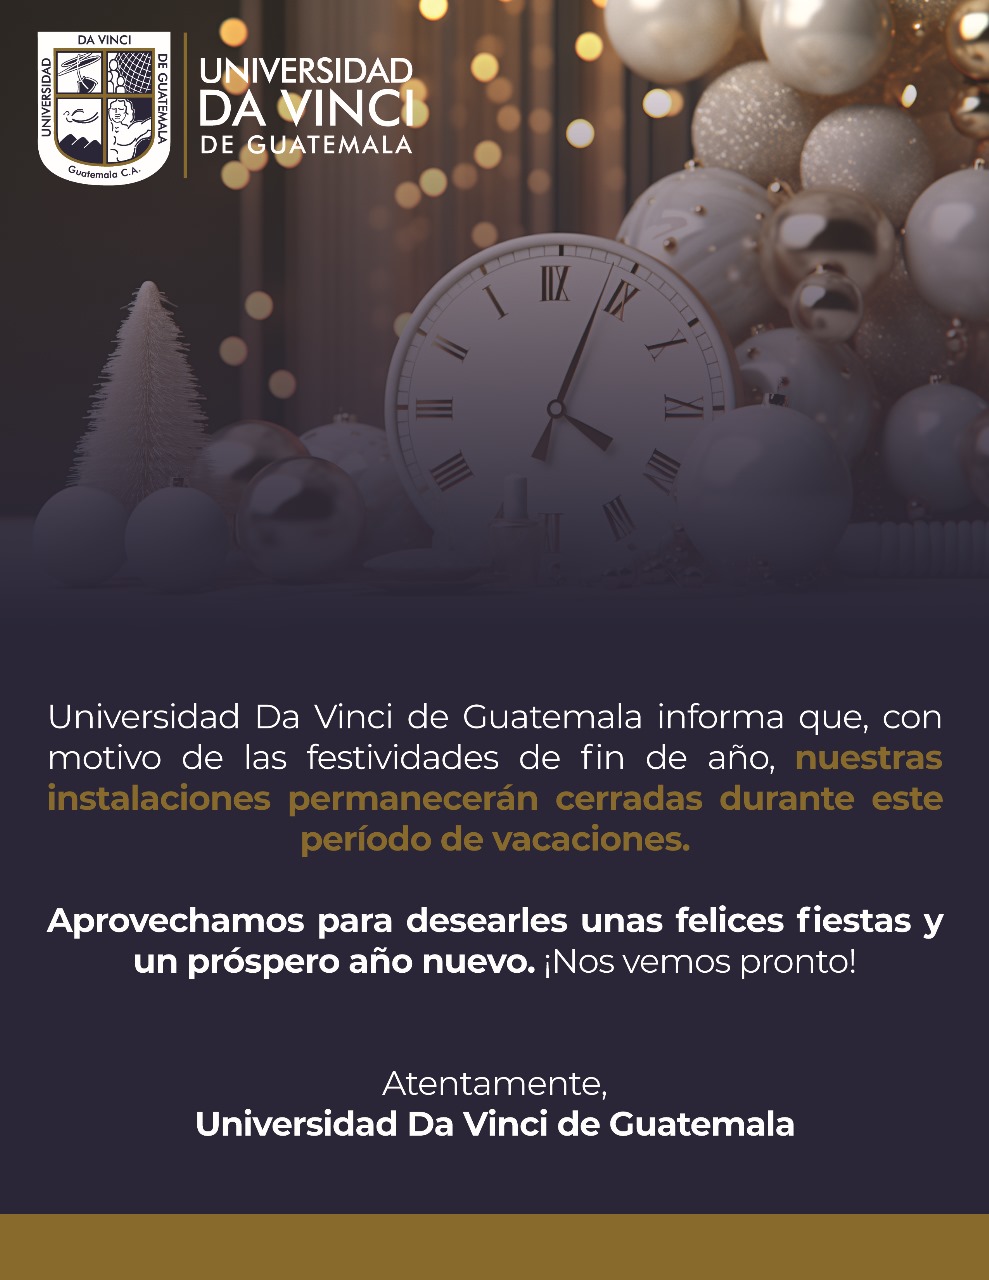 Festividades de fin de año | Universidad da Vinci de Guatemala